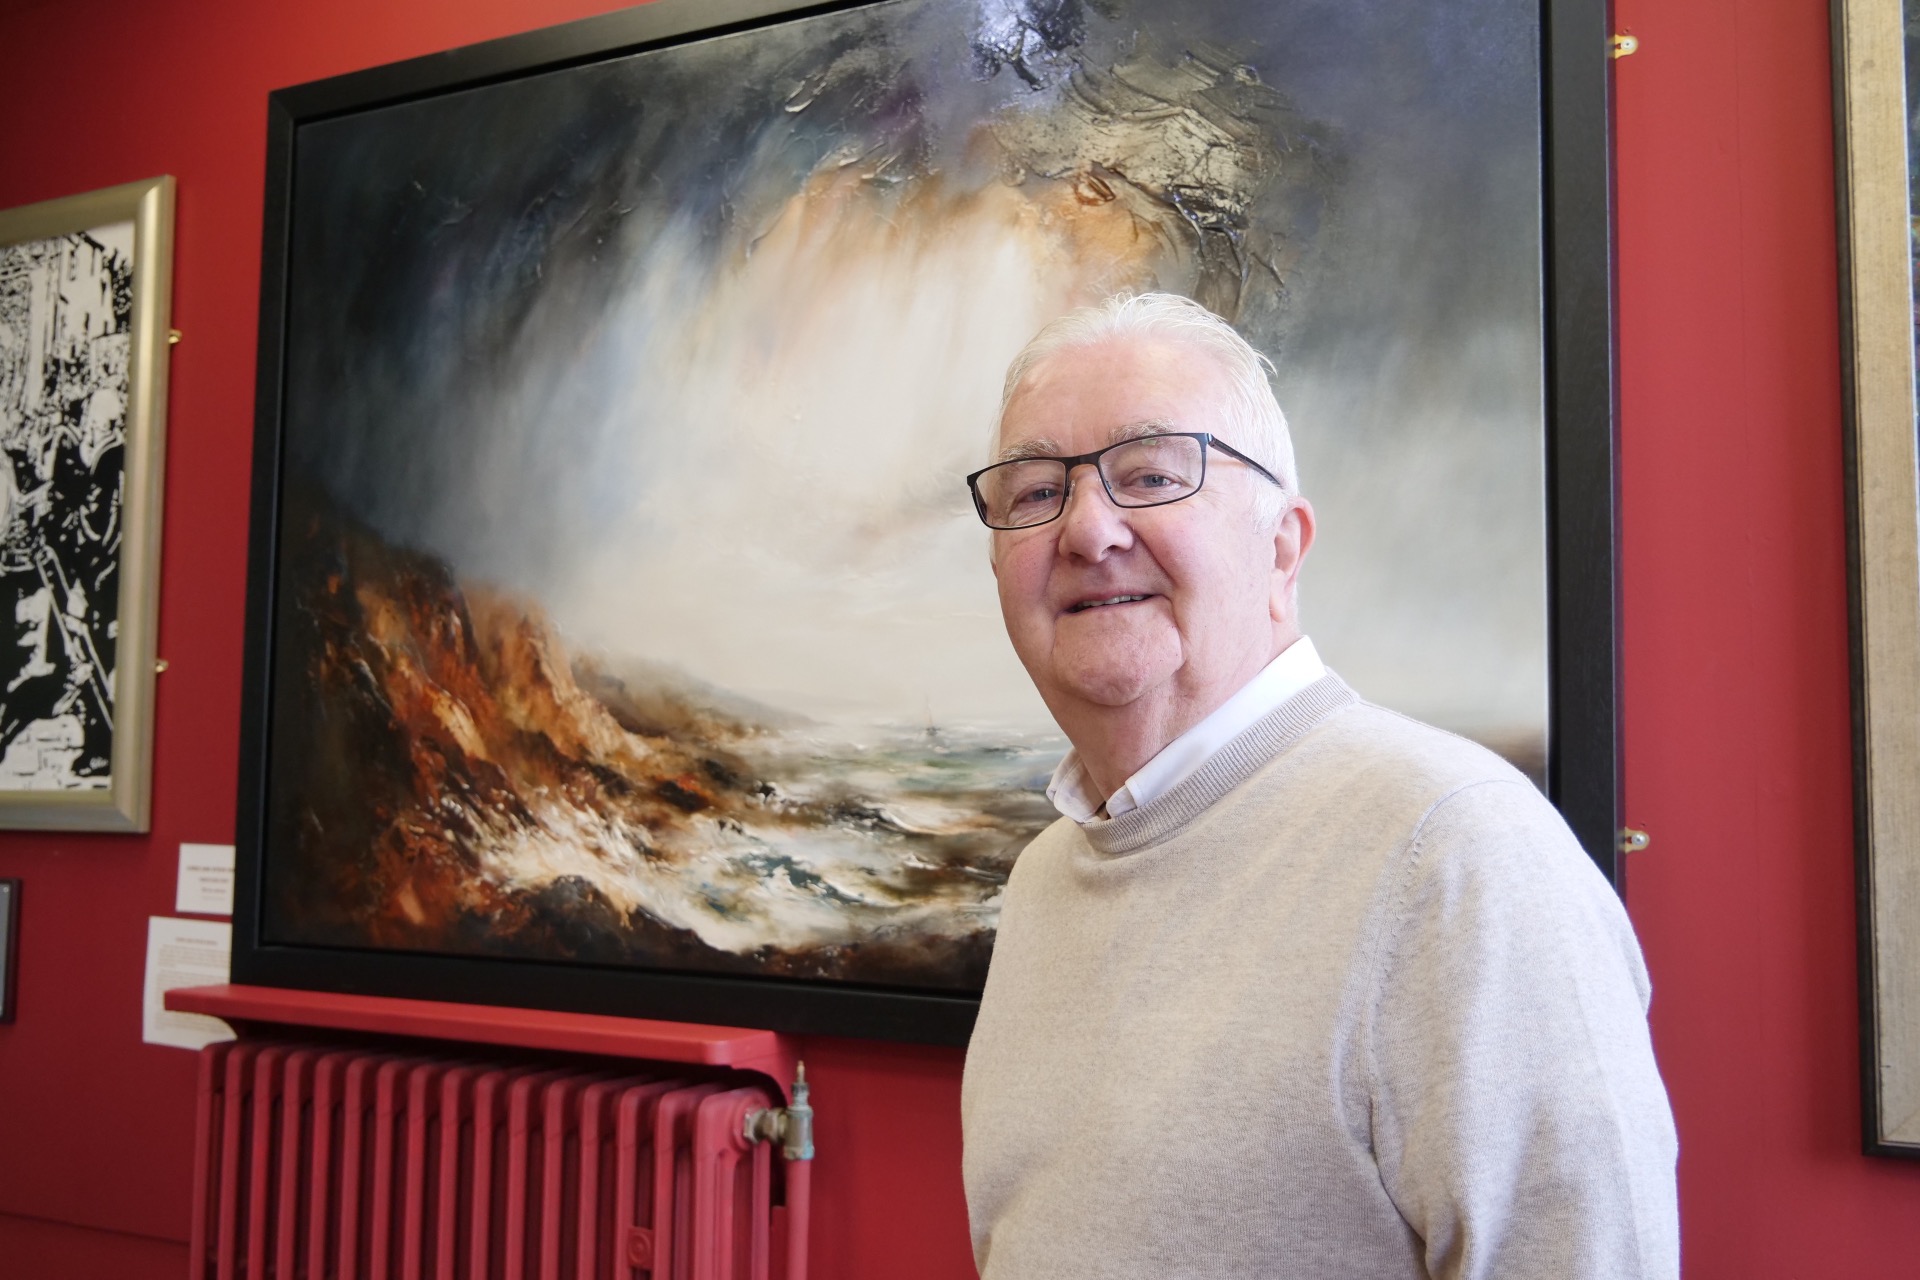 John Thompson, temporary Art Gallery Manager